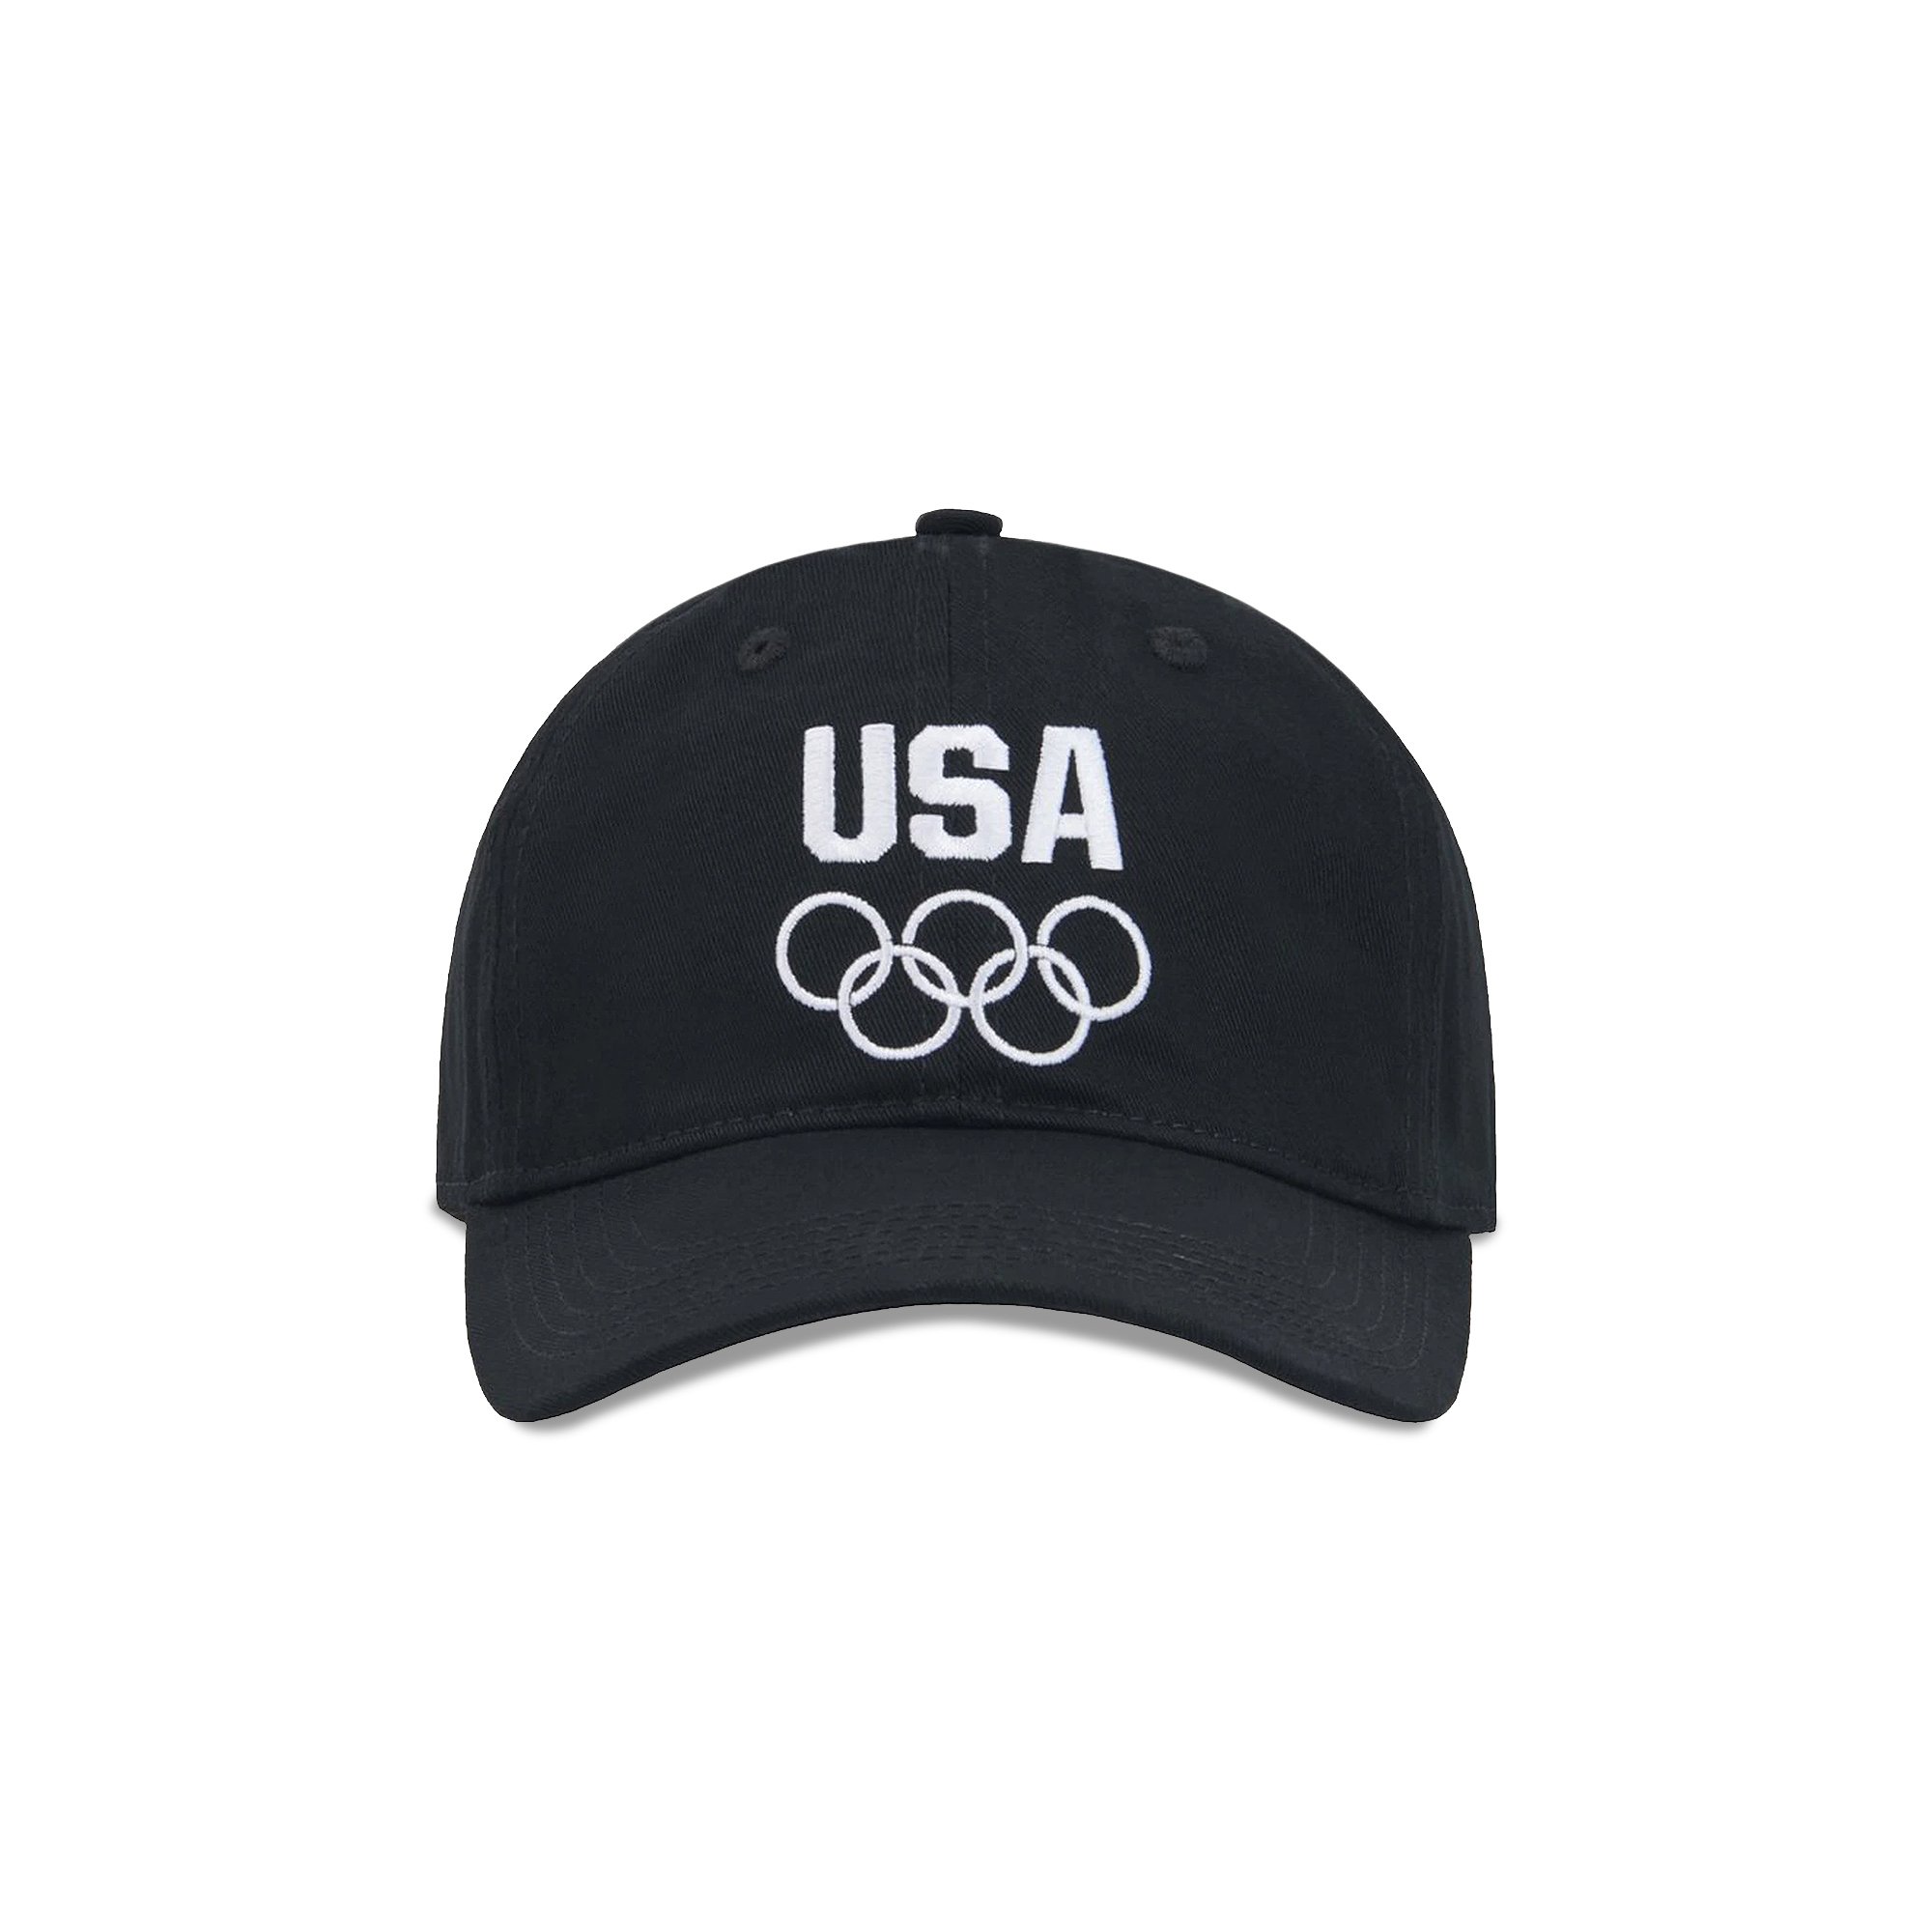 Кепка Kith USA для Олимпийских игр, черная